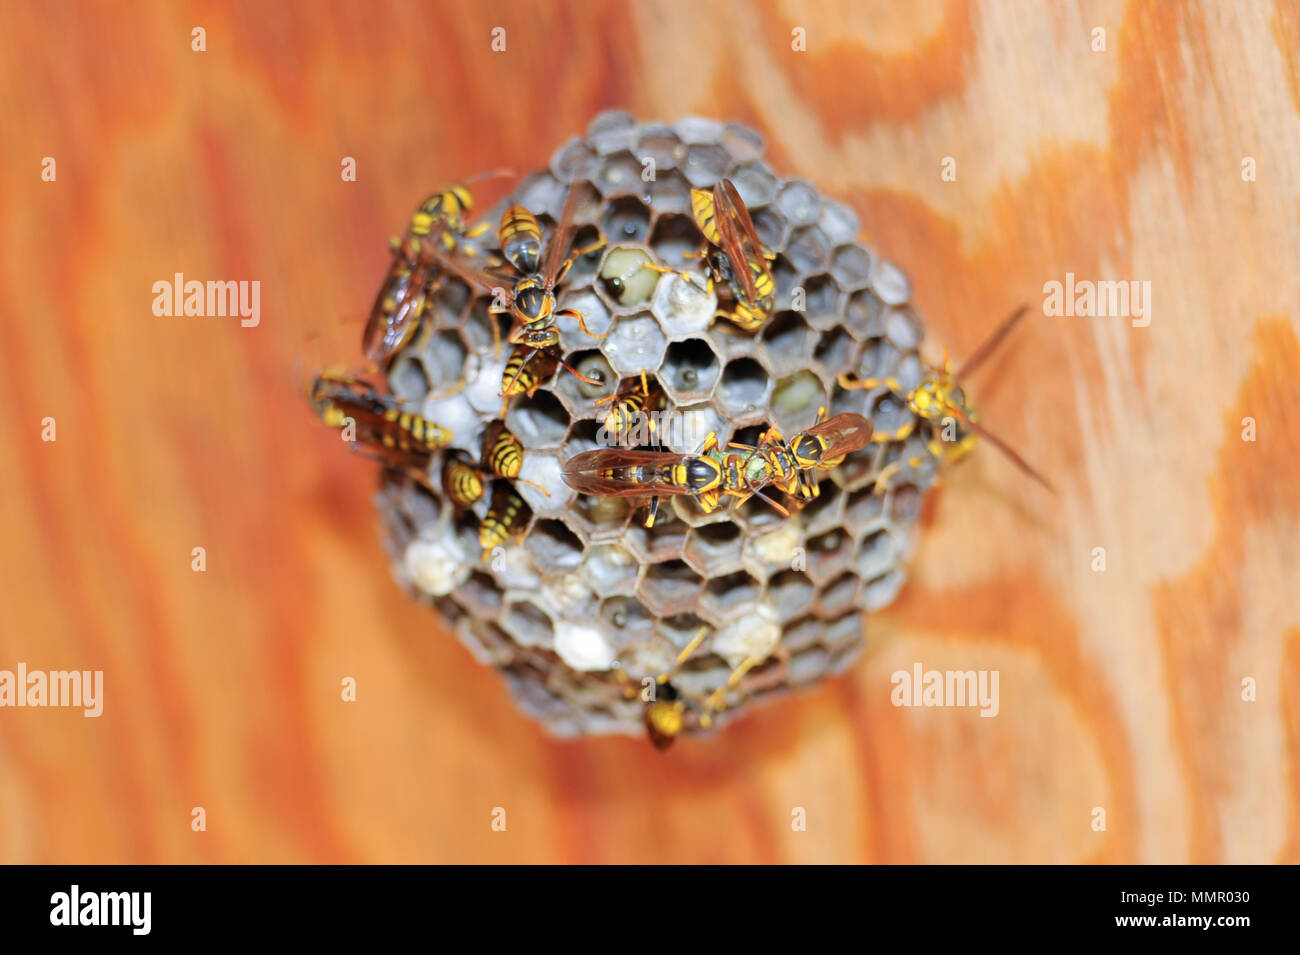 Asian giant hornet or Japanese giant hornet (Vespa mandarinia japonica). (Close-up). Stock Photo